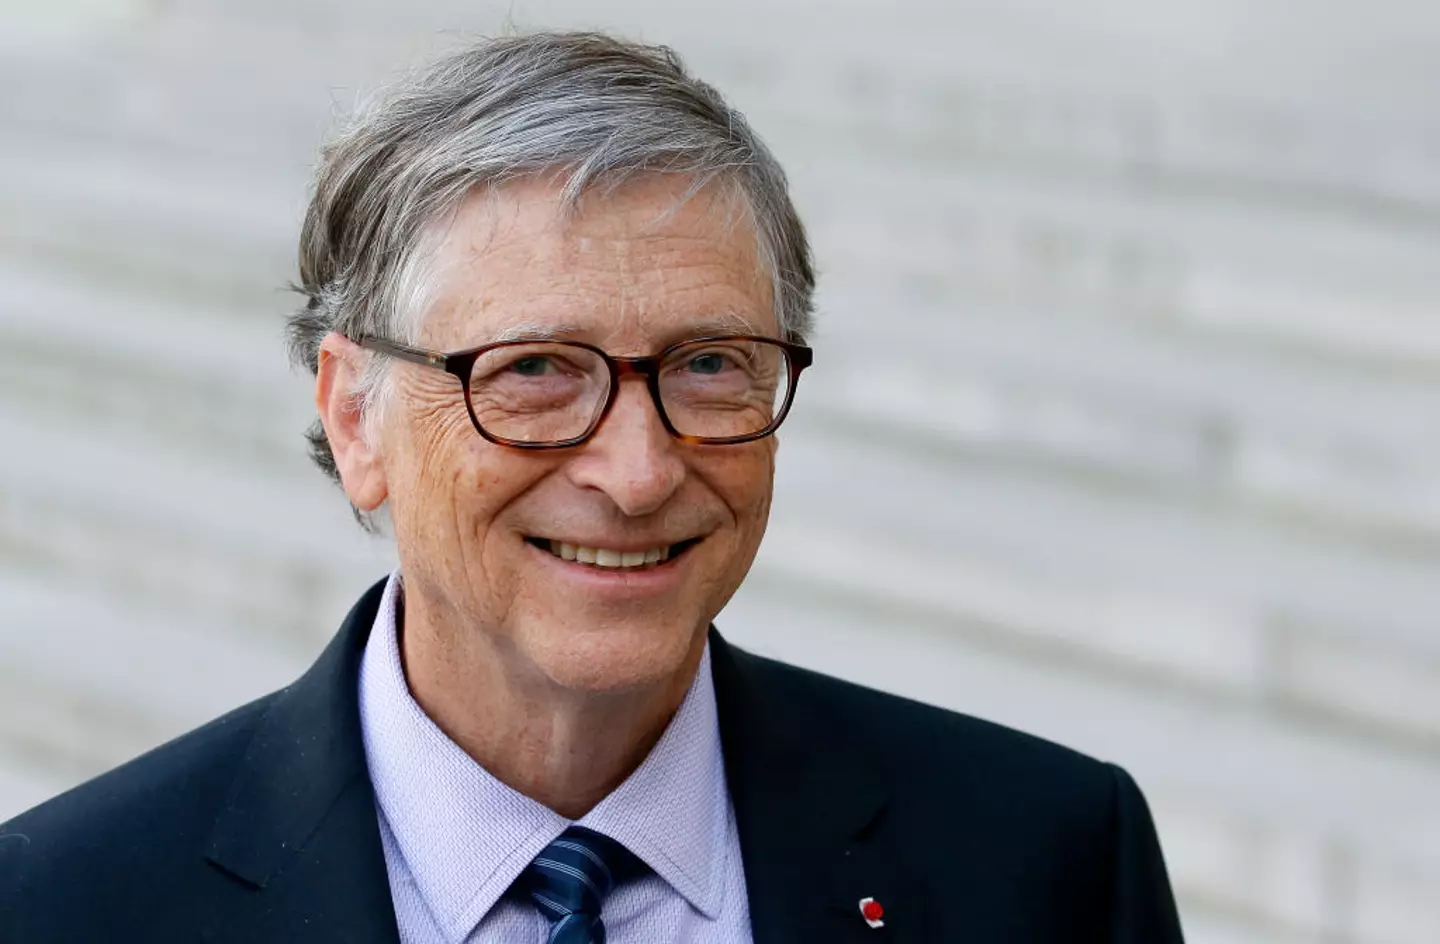 The Bill and Melinda Gates Foundation Trust recently bought 1.7 million shares of Anheuser Busch InBev.